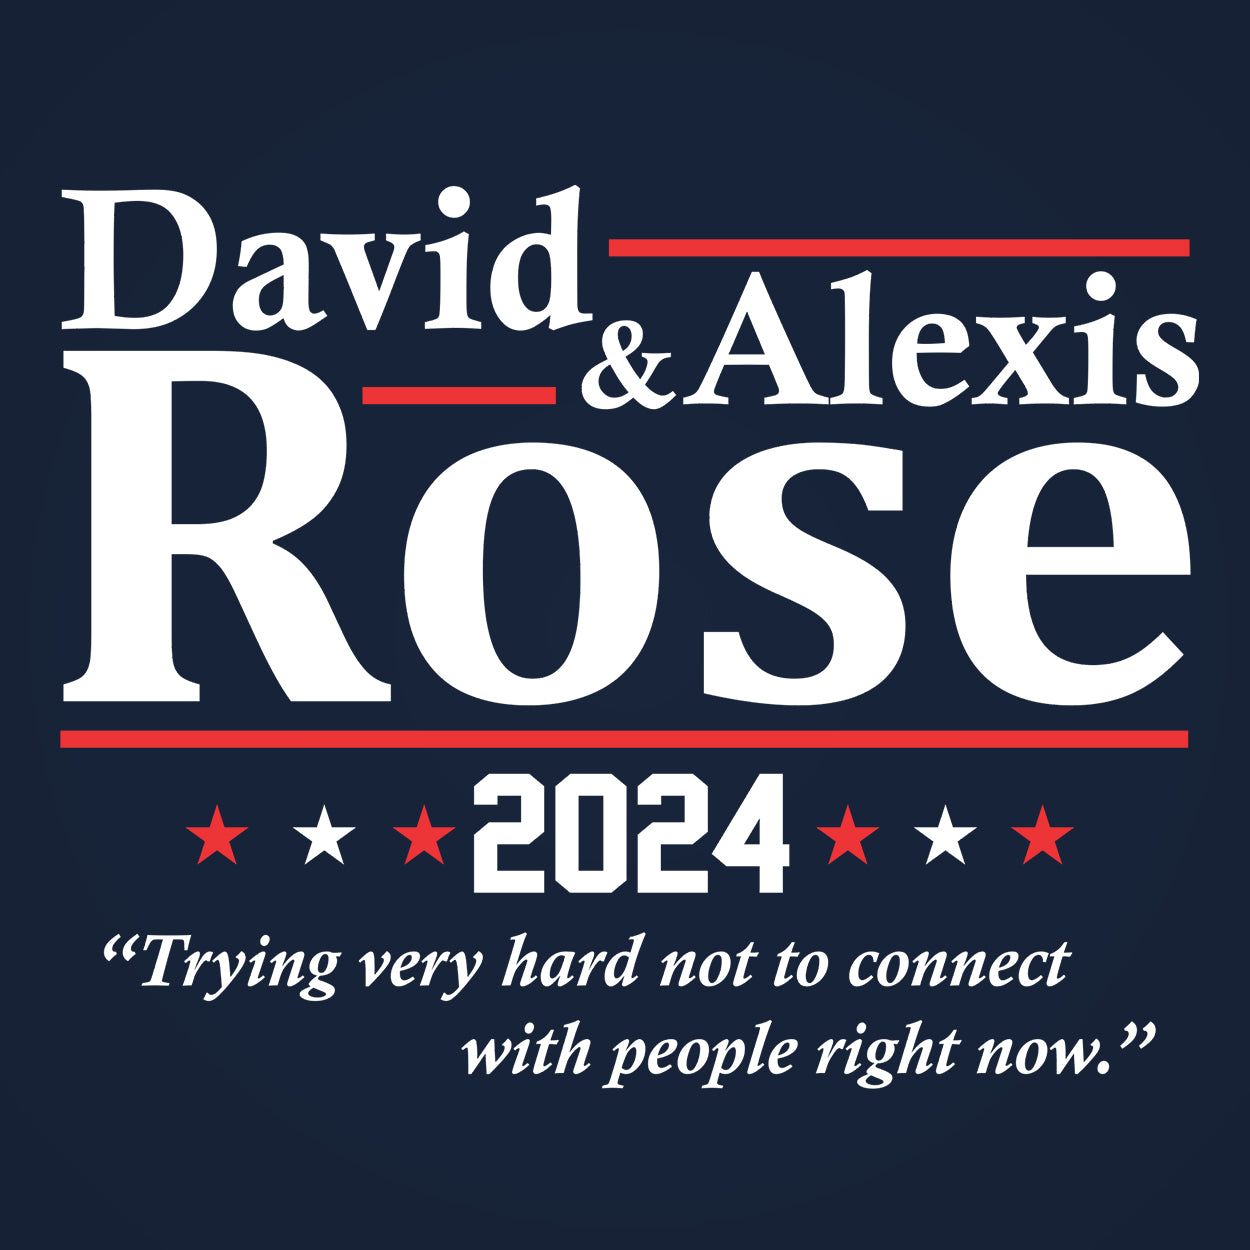 David & Alexis Rose 2024 Election Tshirt - Donkey Tees